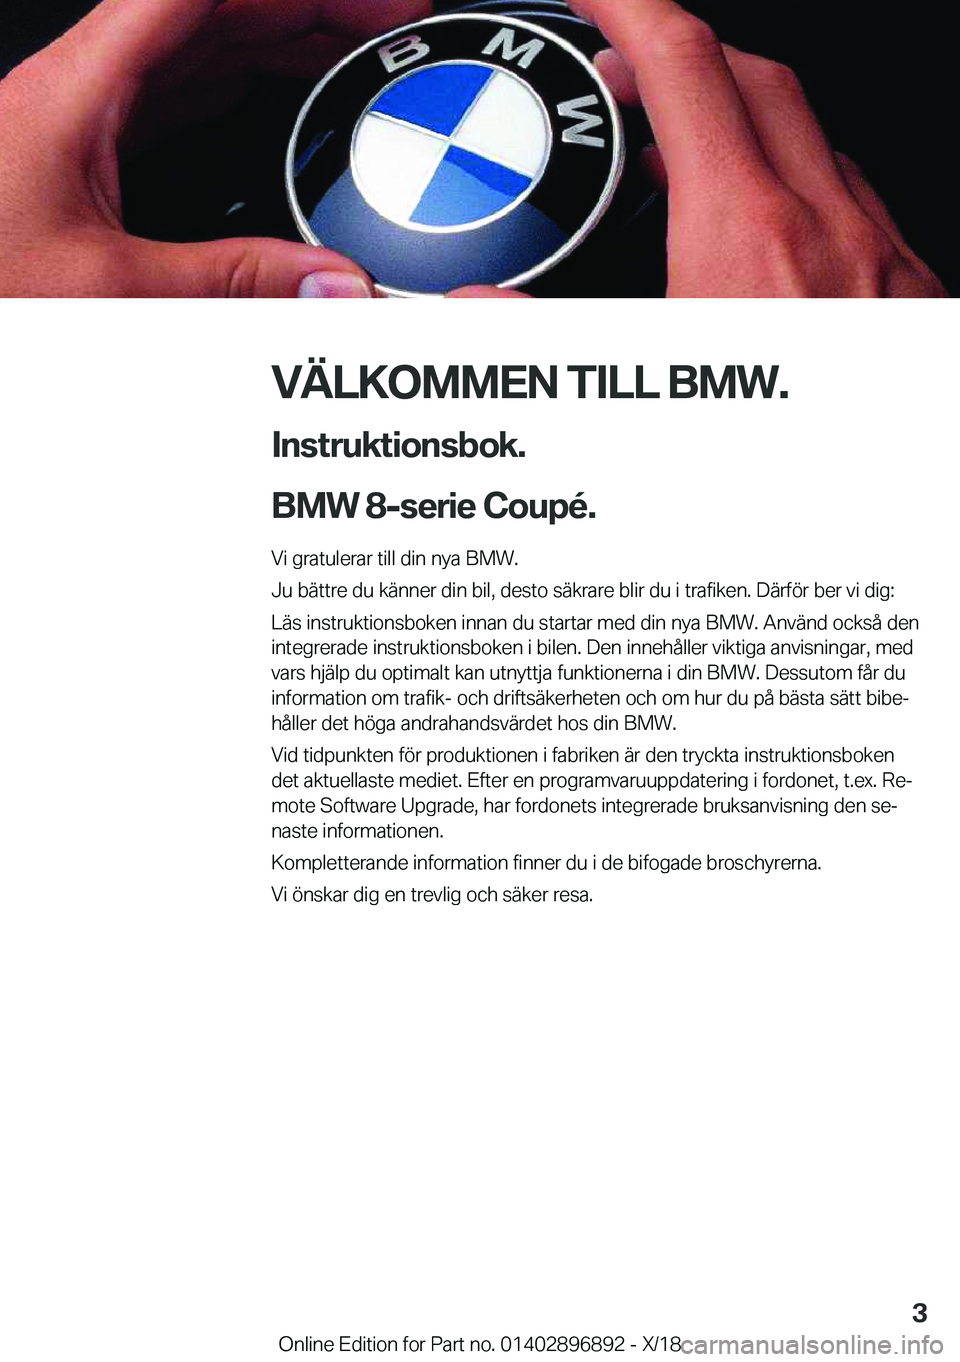 BMW 8 SERIES COUPE 2019  InstruktionsbÖcker (in Swedish) �V�Ä�L�K�O�M�M�E�N��T�I�L�L��B�M�W�.�I�n�s�t�r�u�k�t�i�o�n�s�b�o�k�.
�B�M�W��8�-�s�e�r�i�e��C�o�u�p�